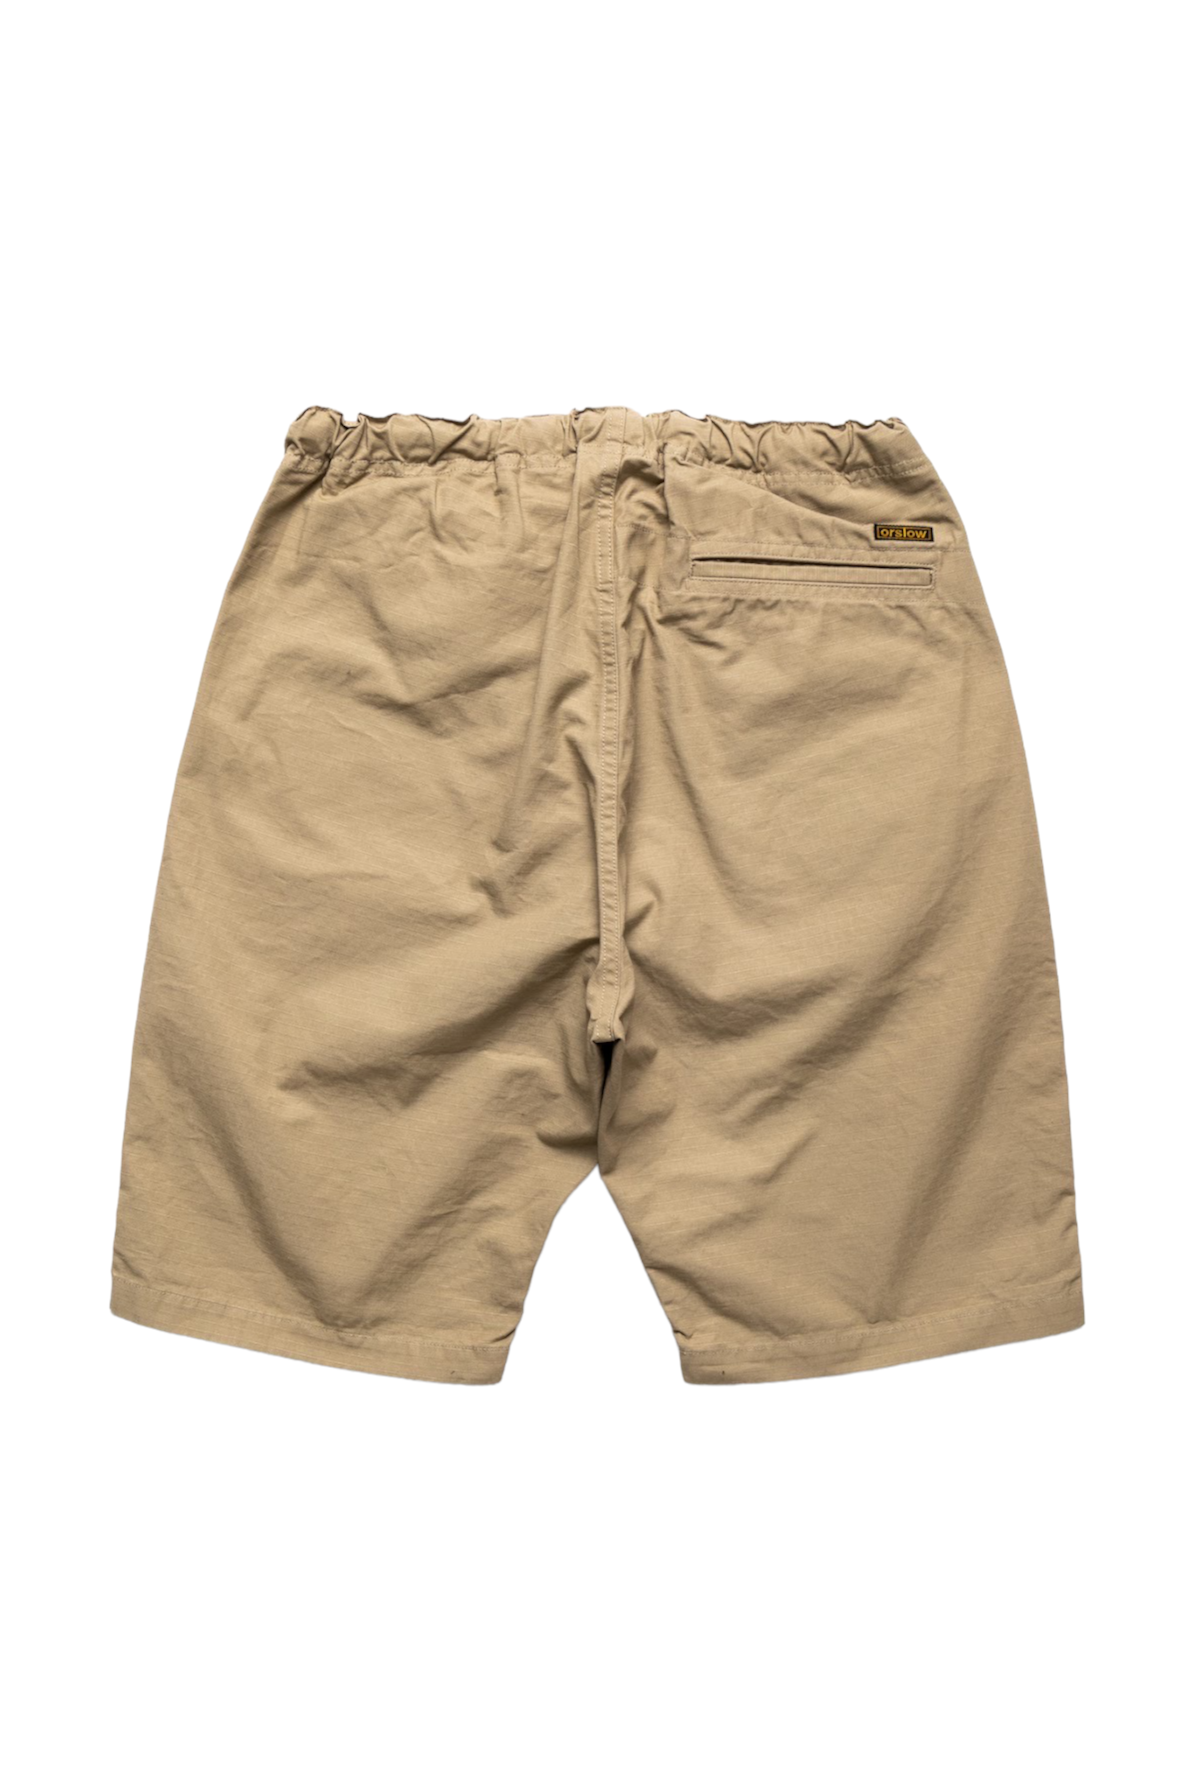 New Yorker Shorts - Beige